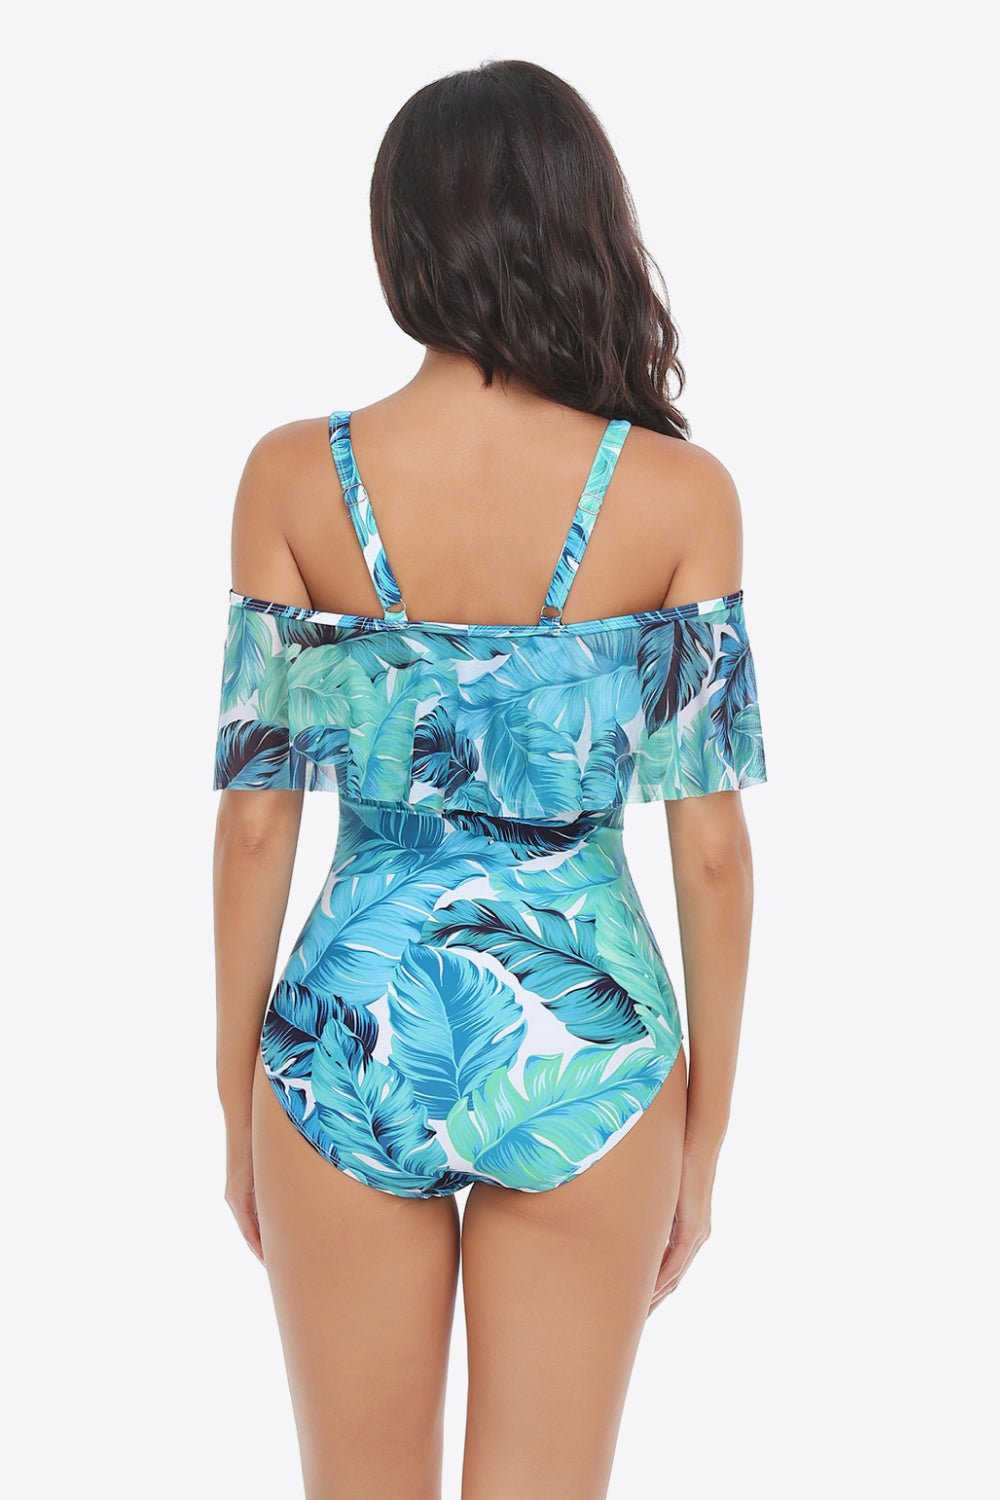 Botanical Print Cold-Shoulder Layered One-Piece Swimsuit - The Fashion Unicorn